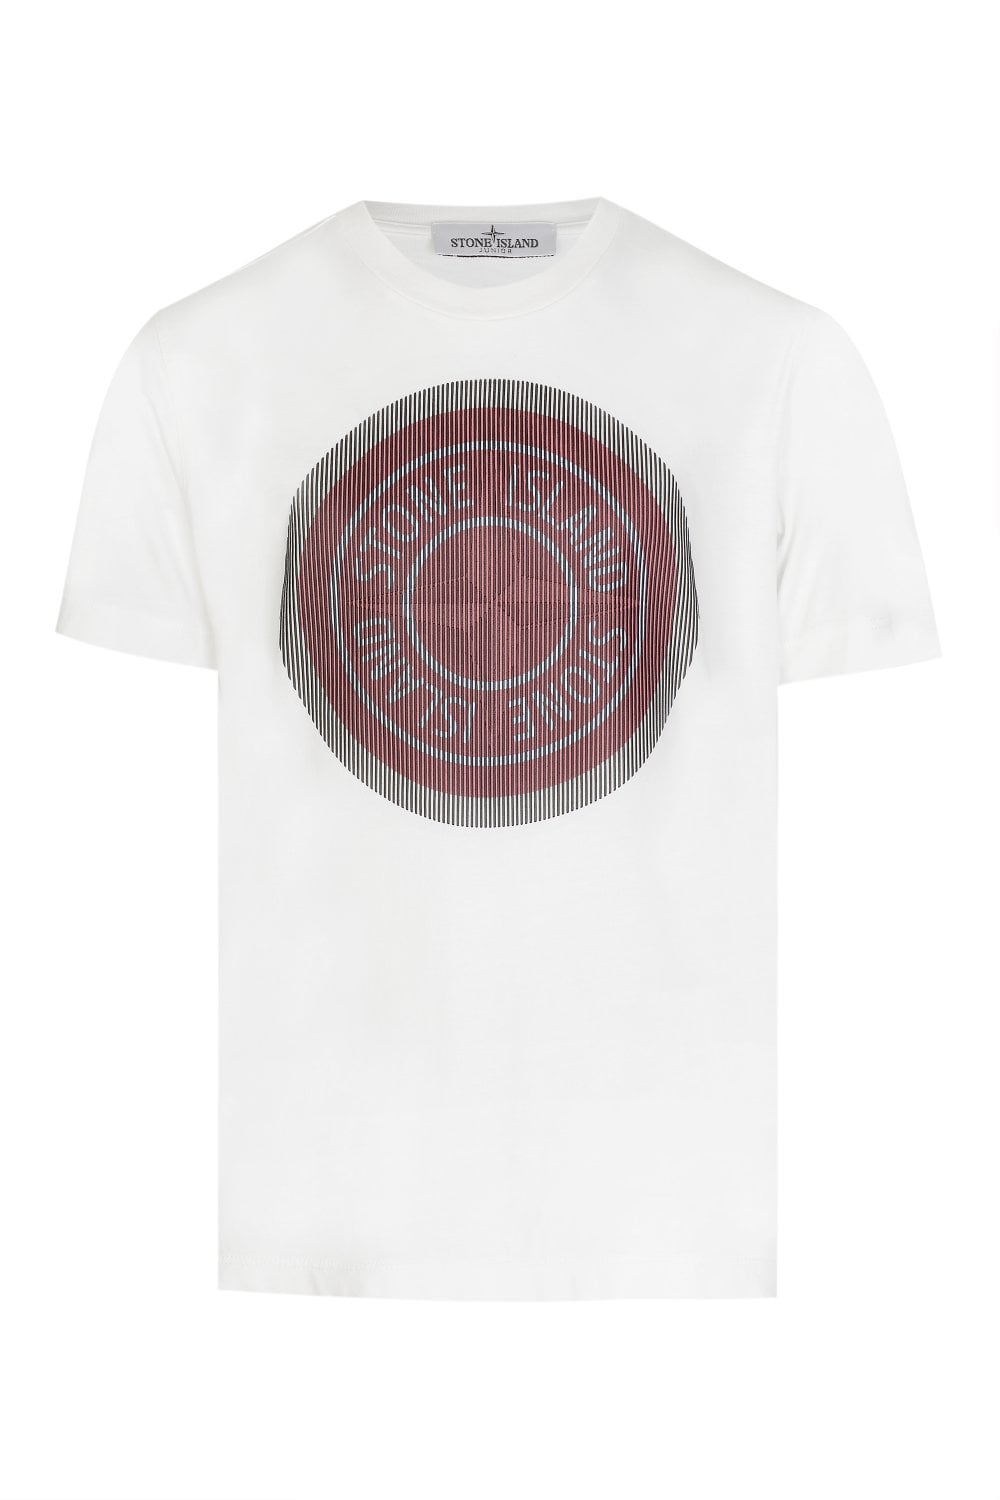 Kids Stone Island Circle Logo T Shirt White